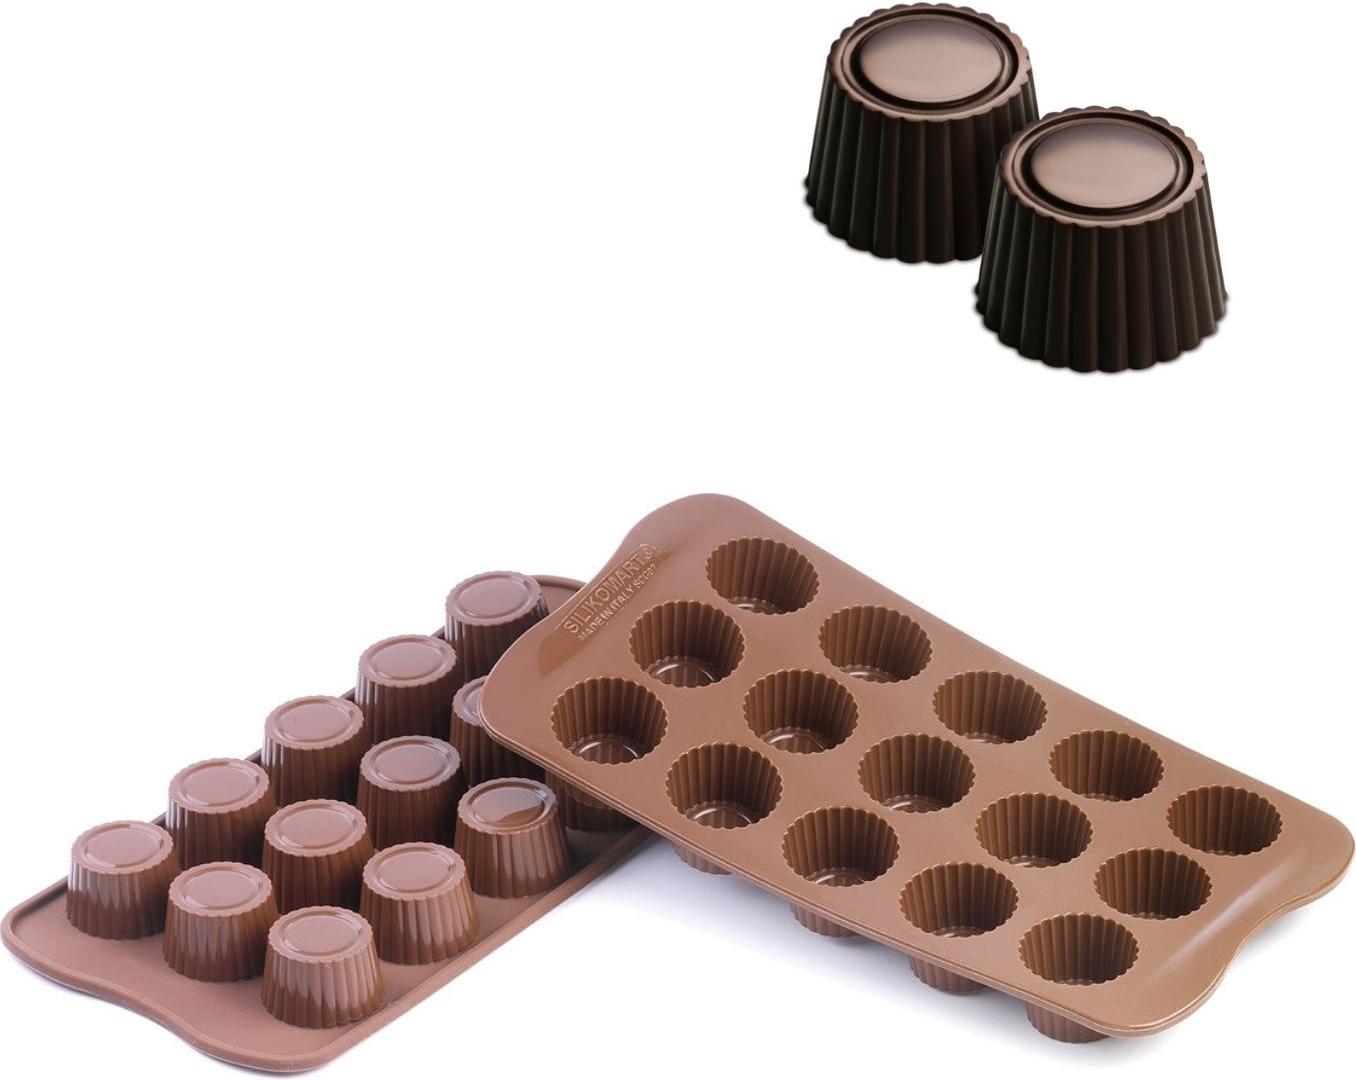 Silicone Muffin Cups - Praline